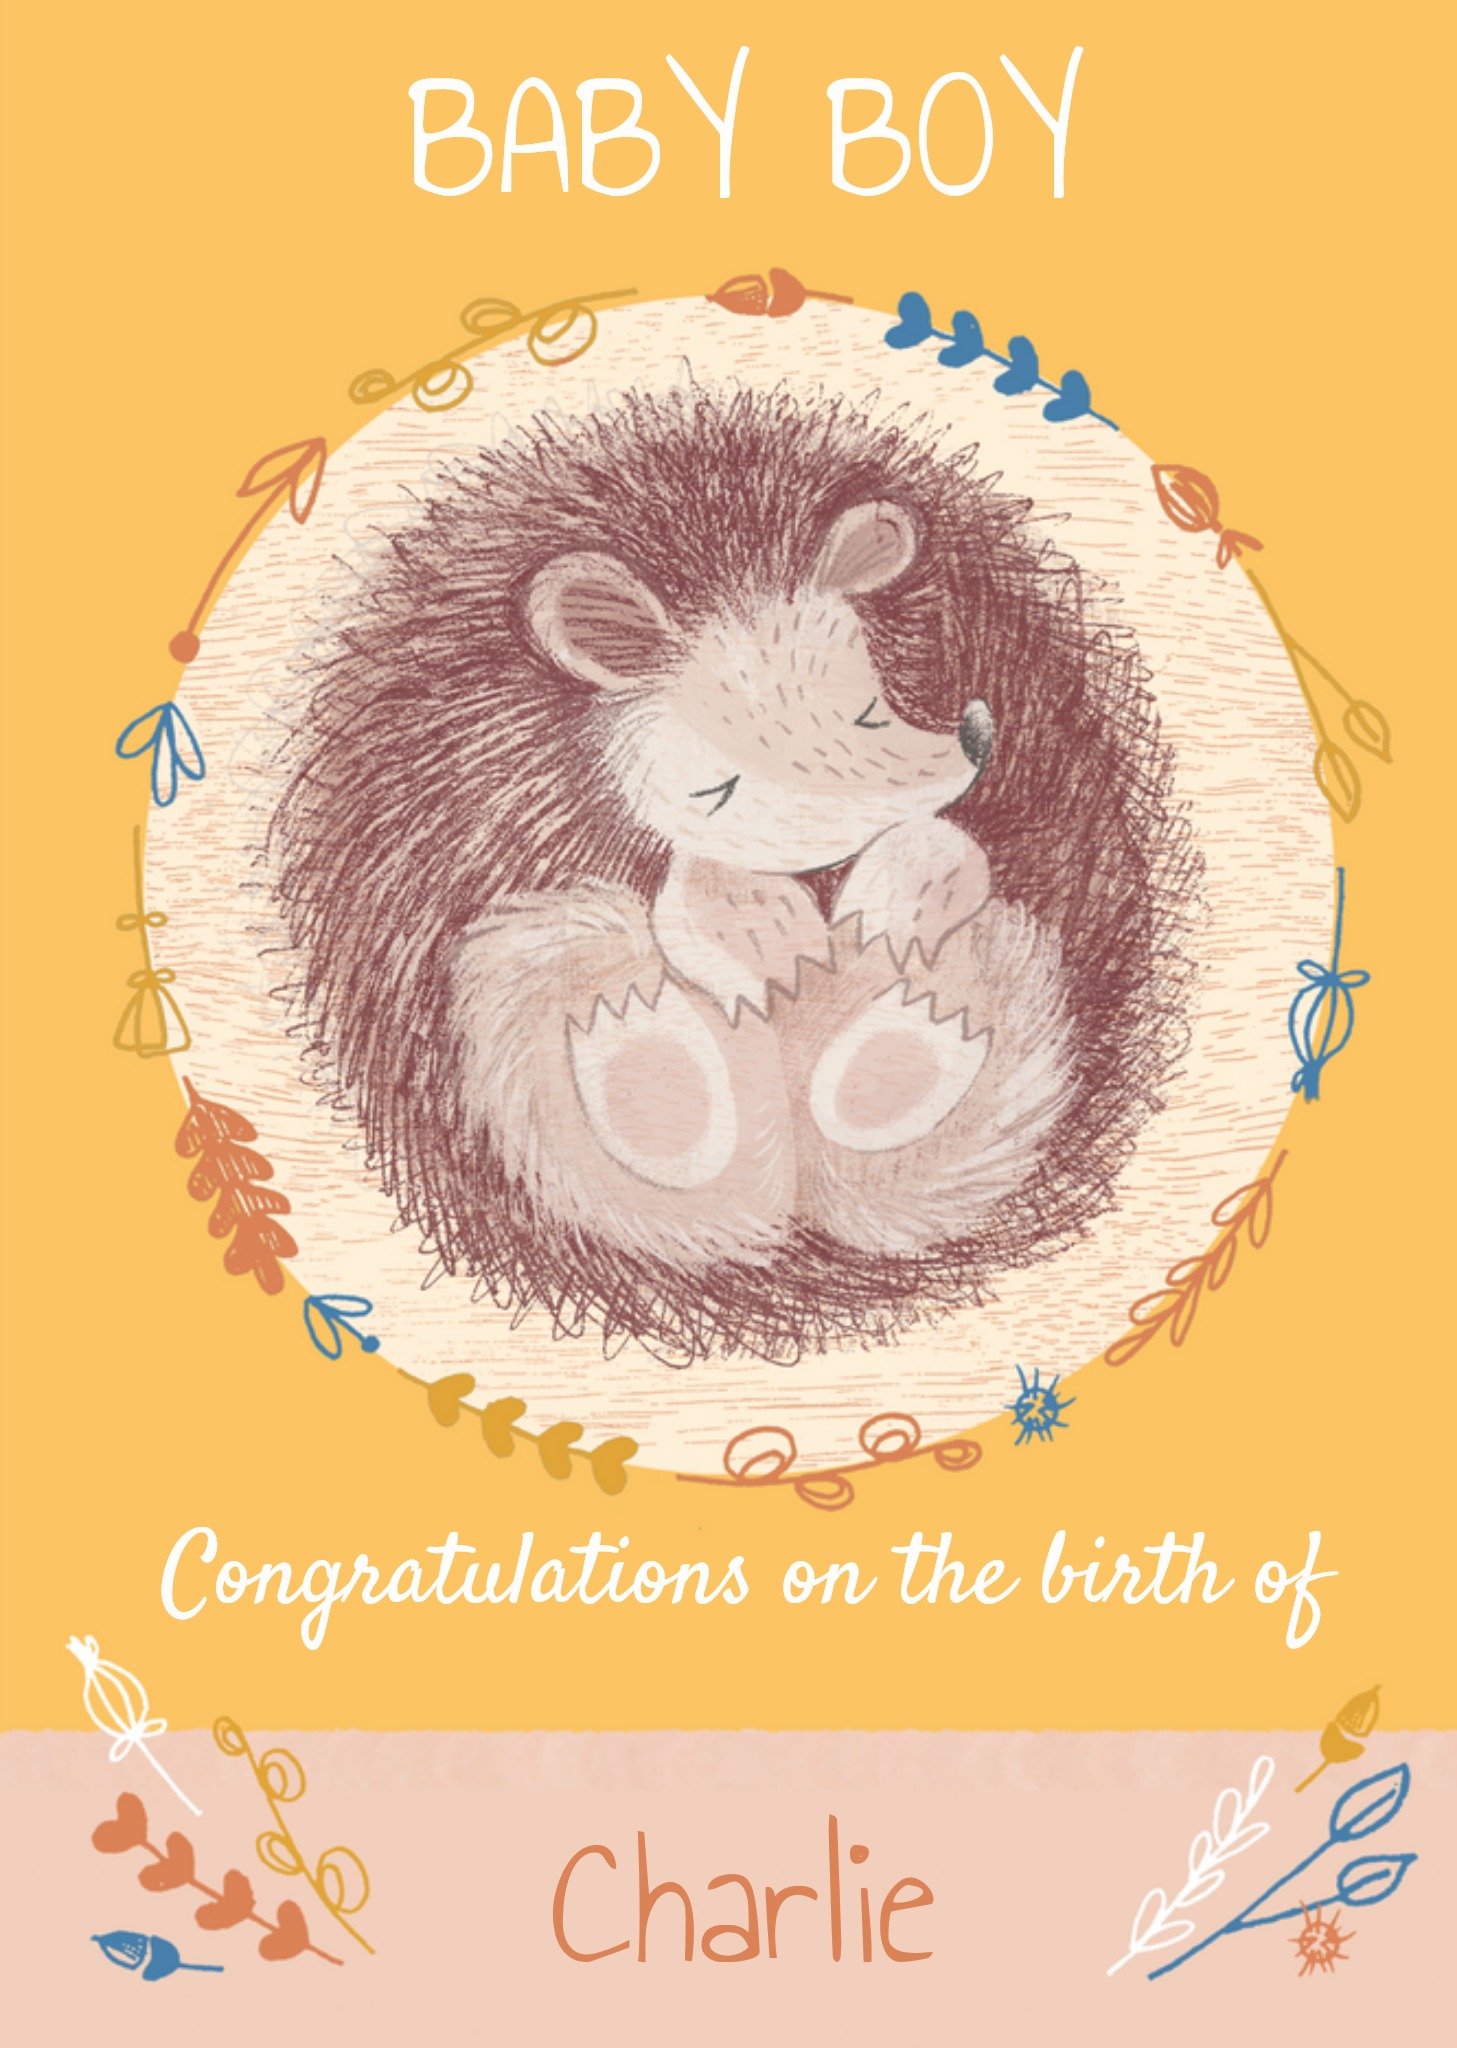 Moonpig Super Sweet Illustrated Curled Up Hibernating Hedgehog Birthday Card, Large